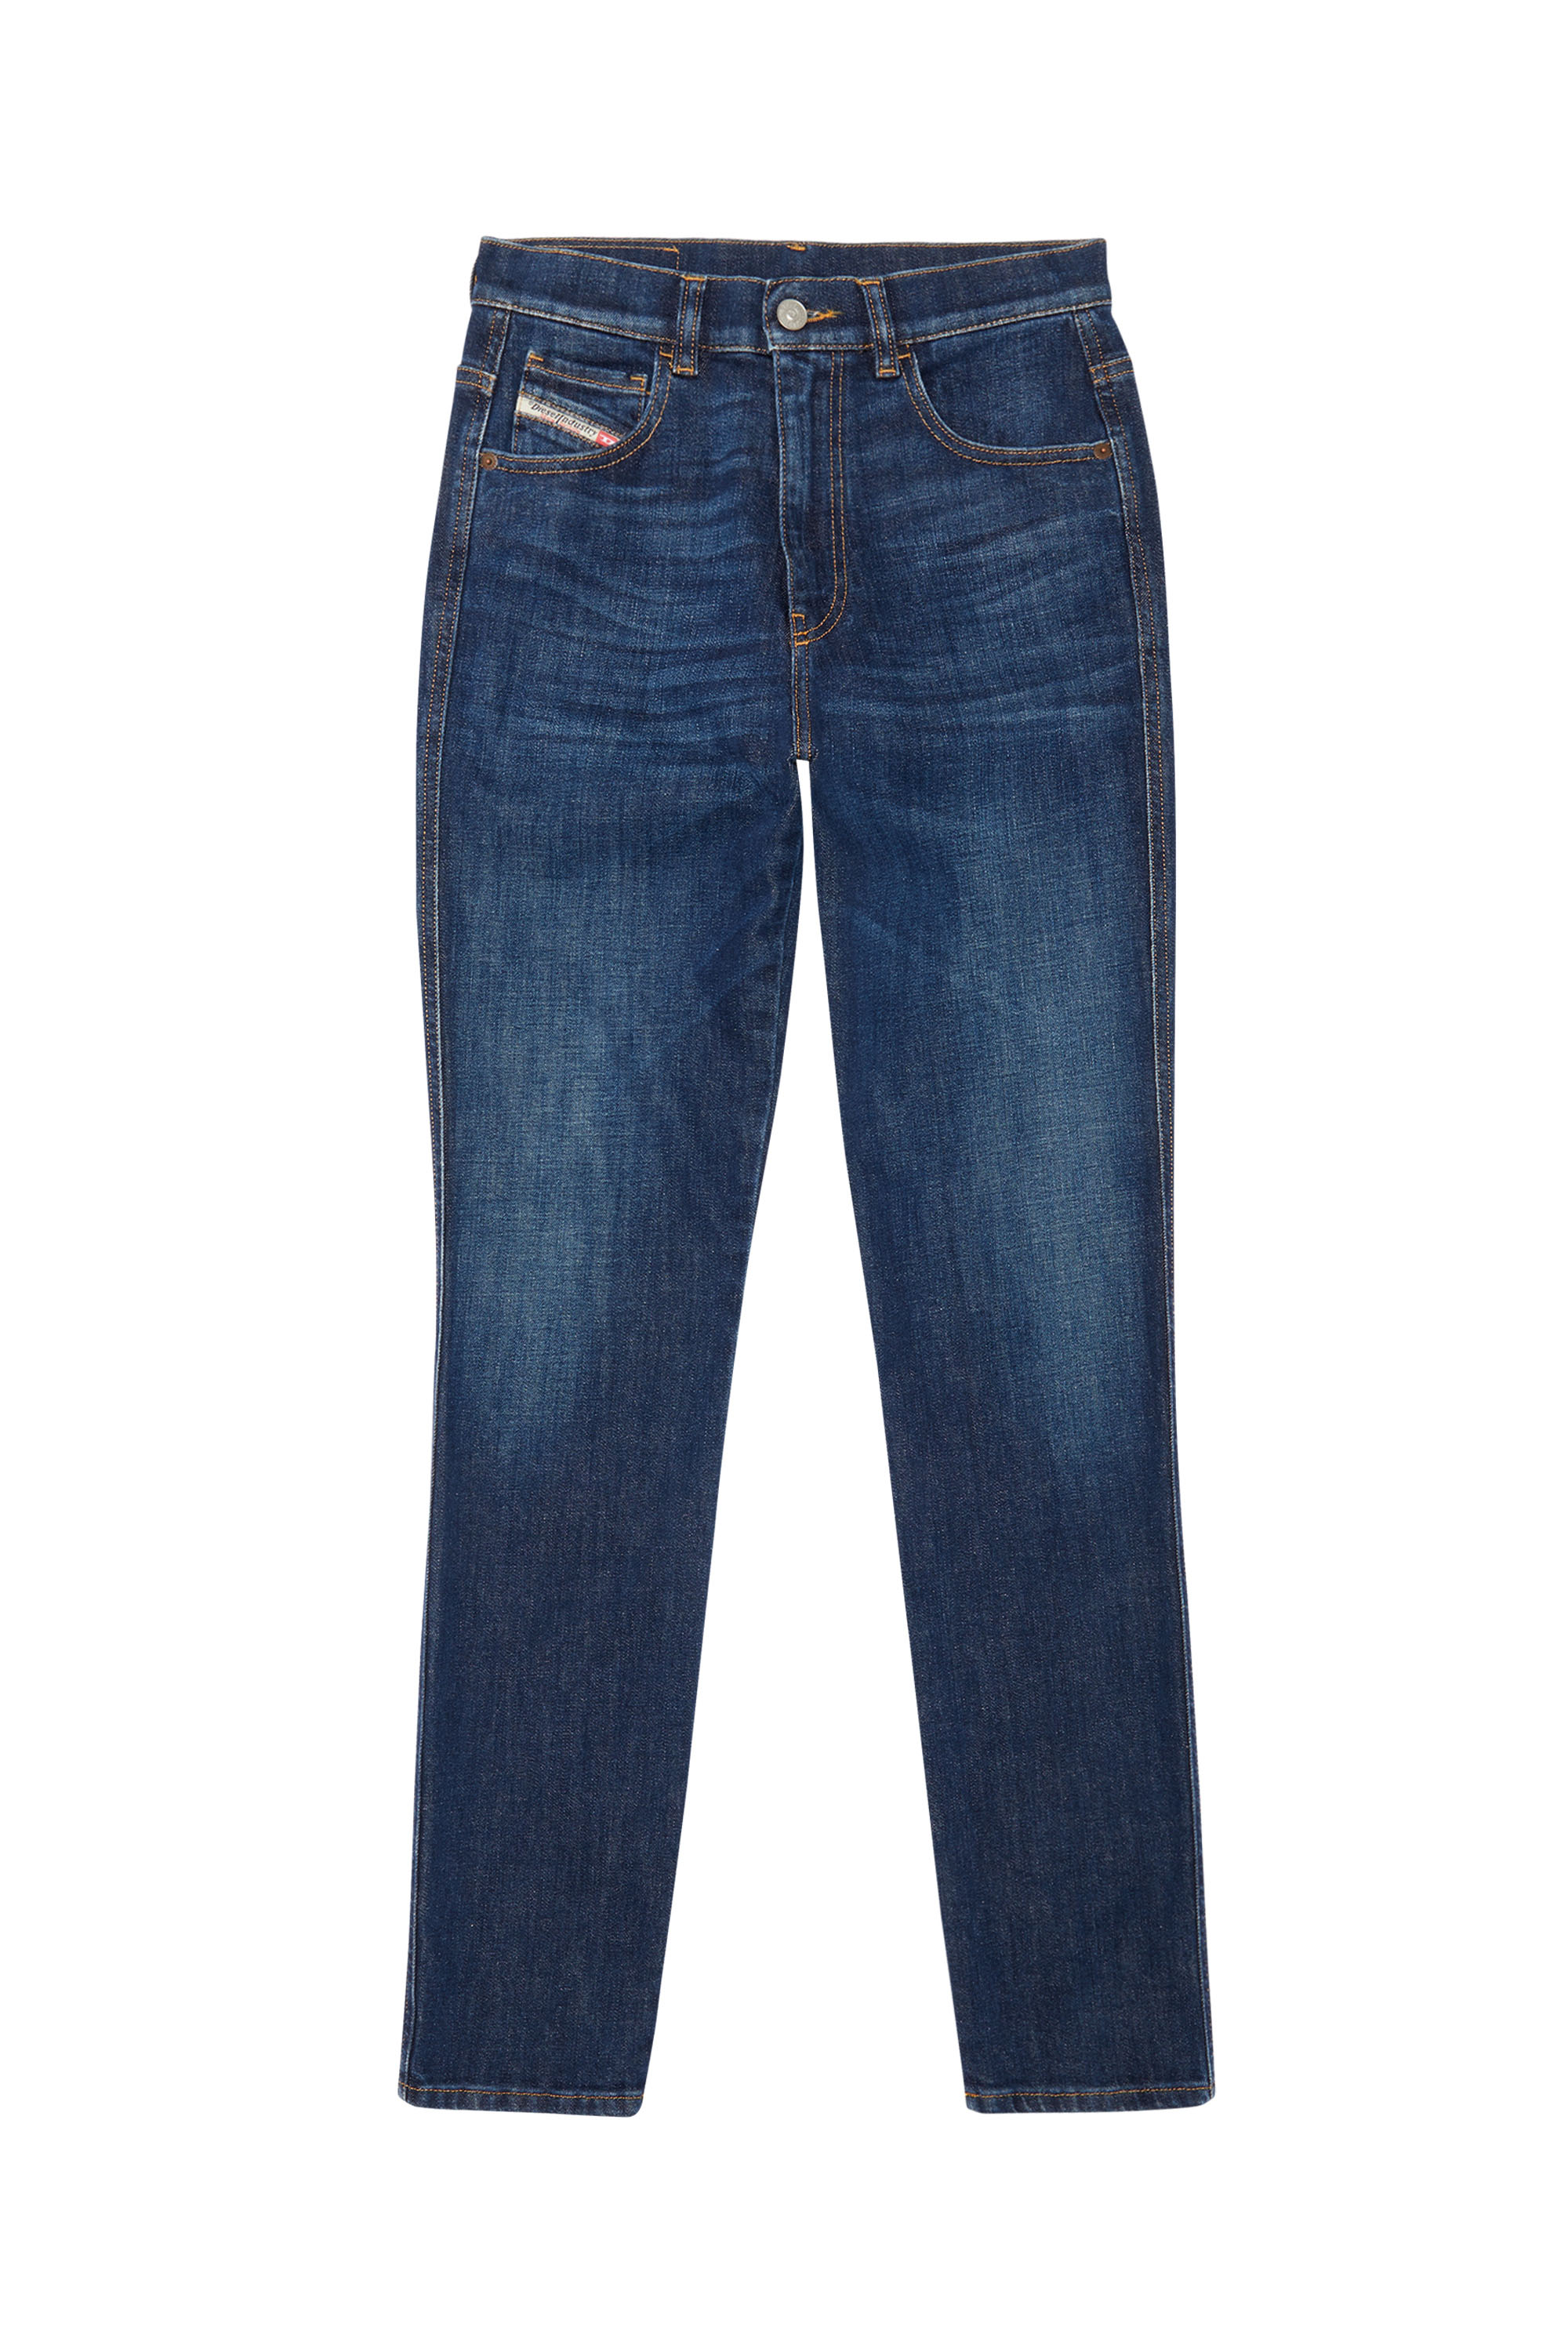 1994 09B90 Straight Jeans, Dunkelblau - Jeans